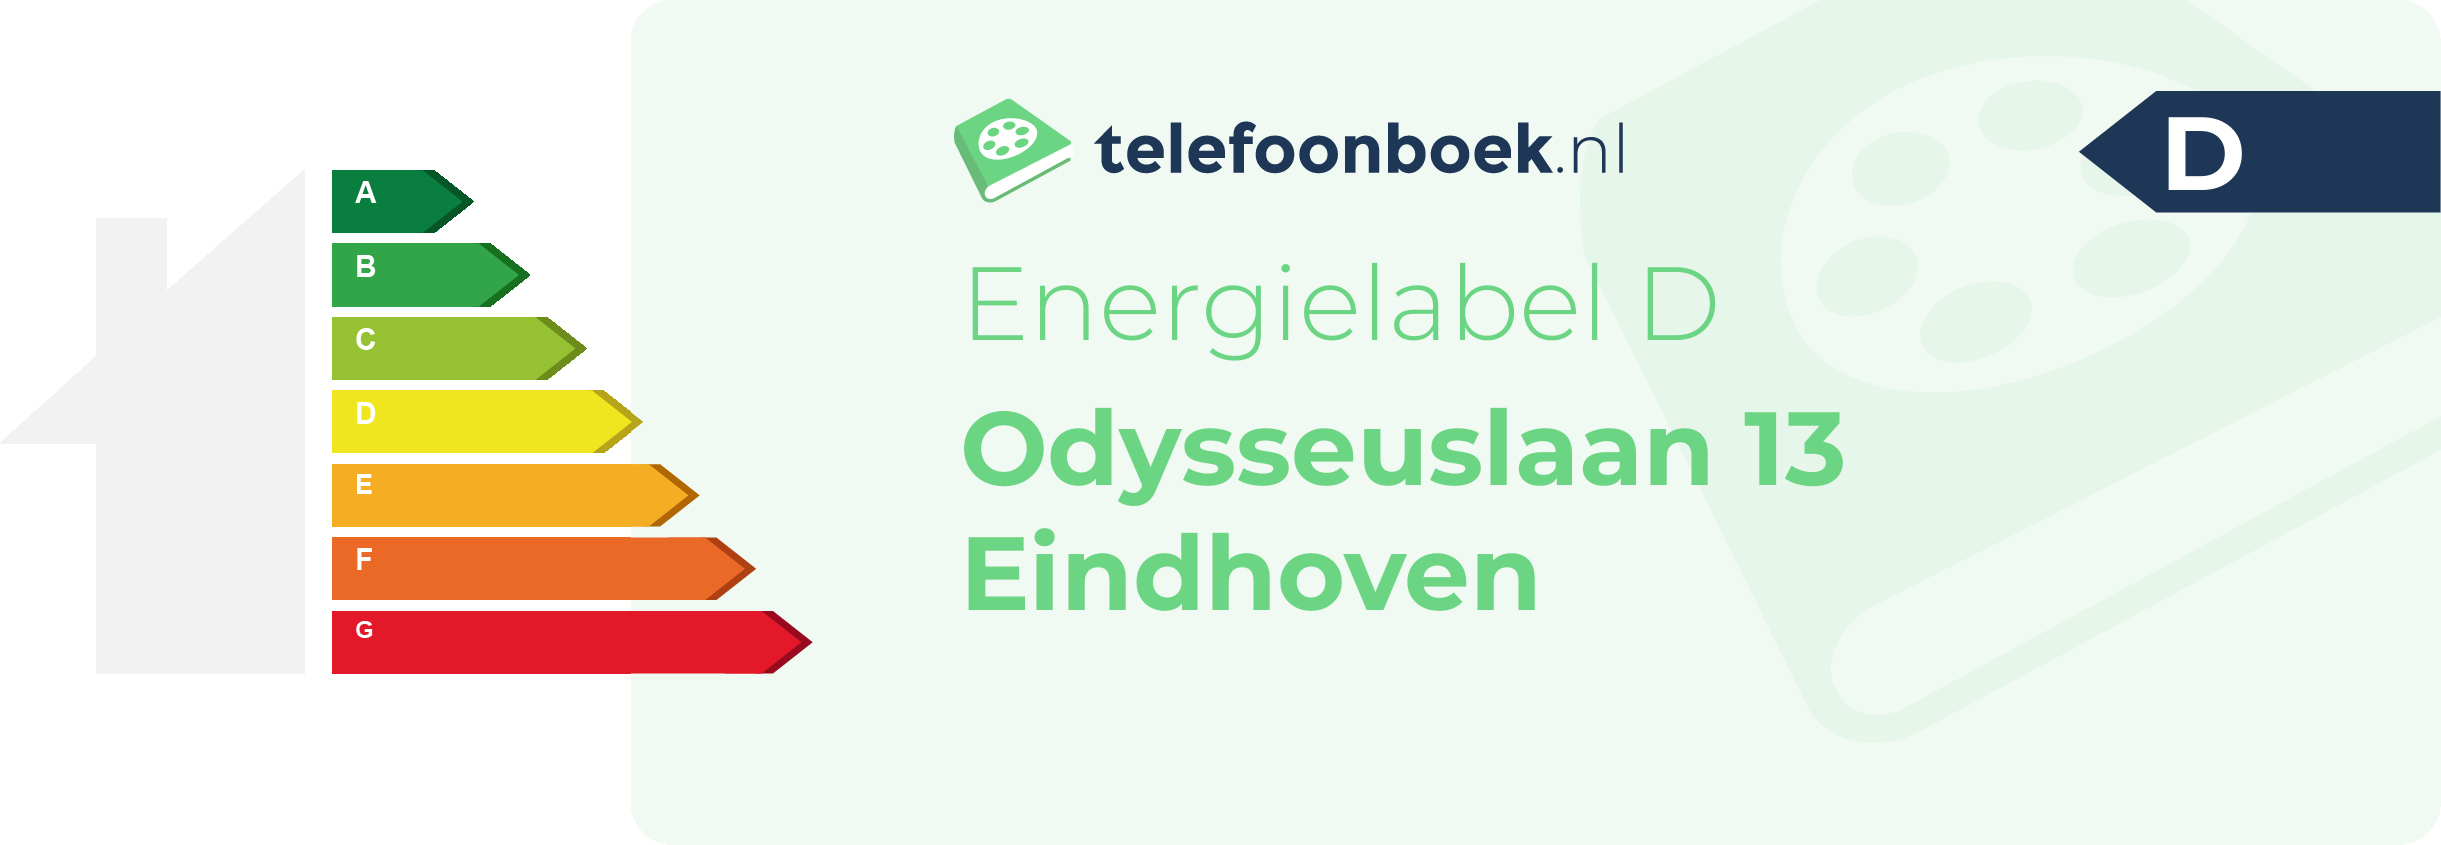 Energielabel Odysseuslaan 13 Eindhoven